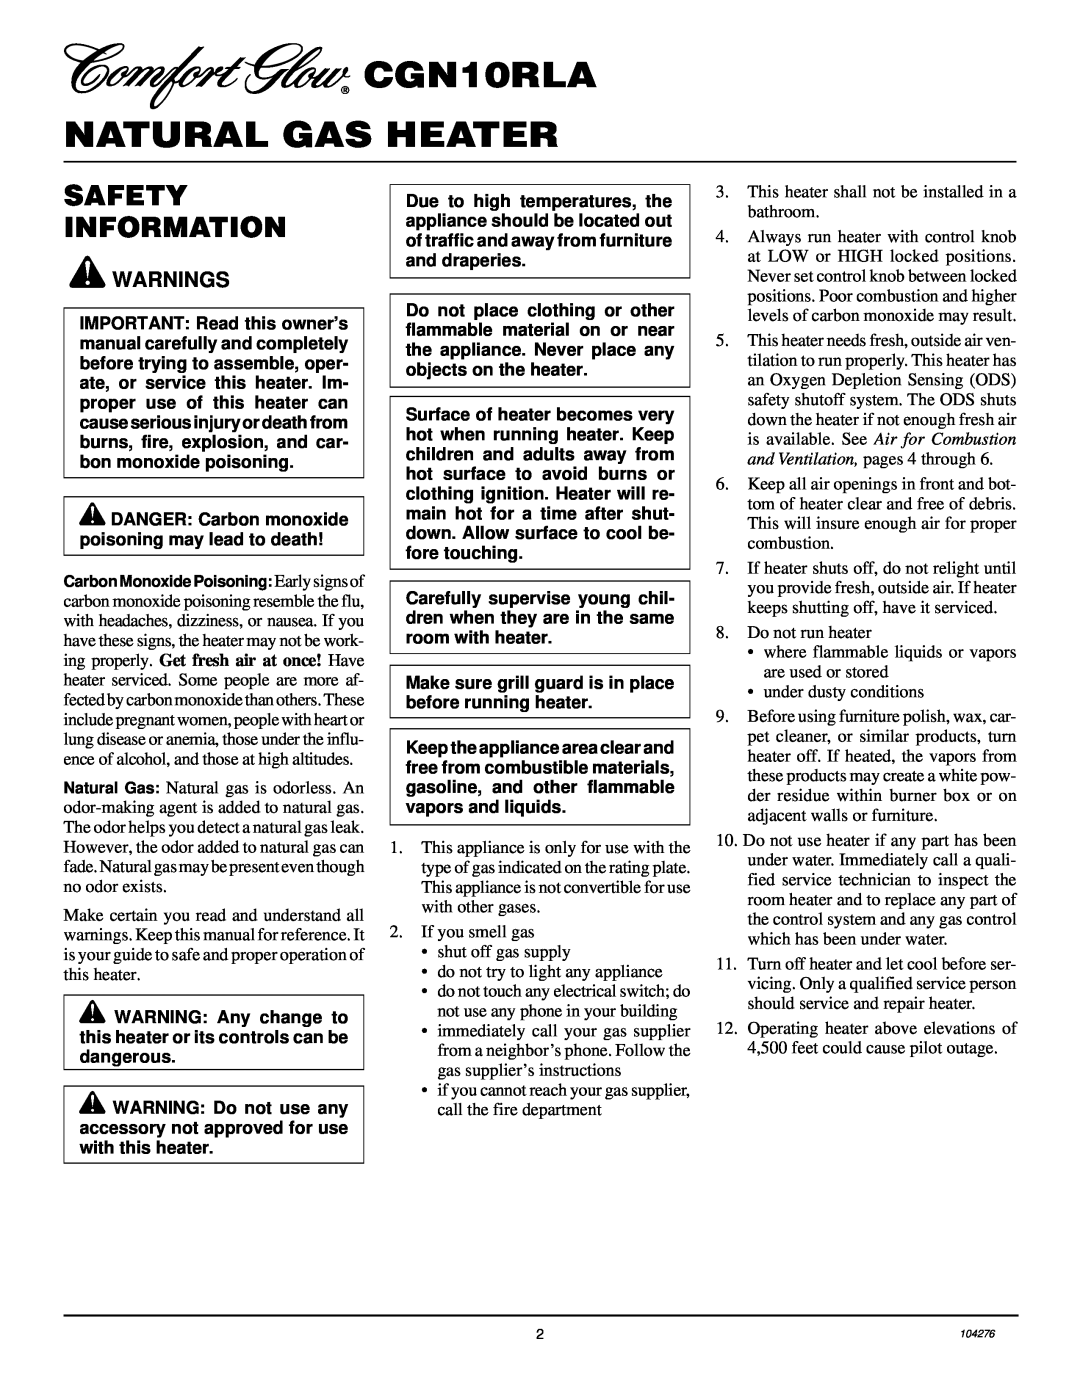 Desa installation manual CGN10RLA NATURAL GAS HEATER, Safety Information 